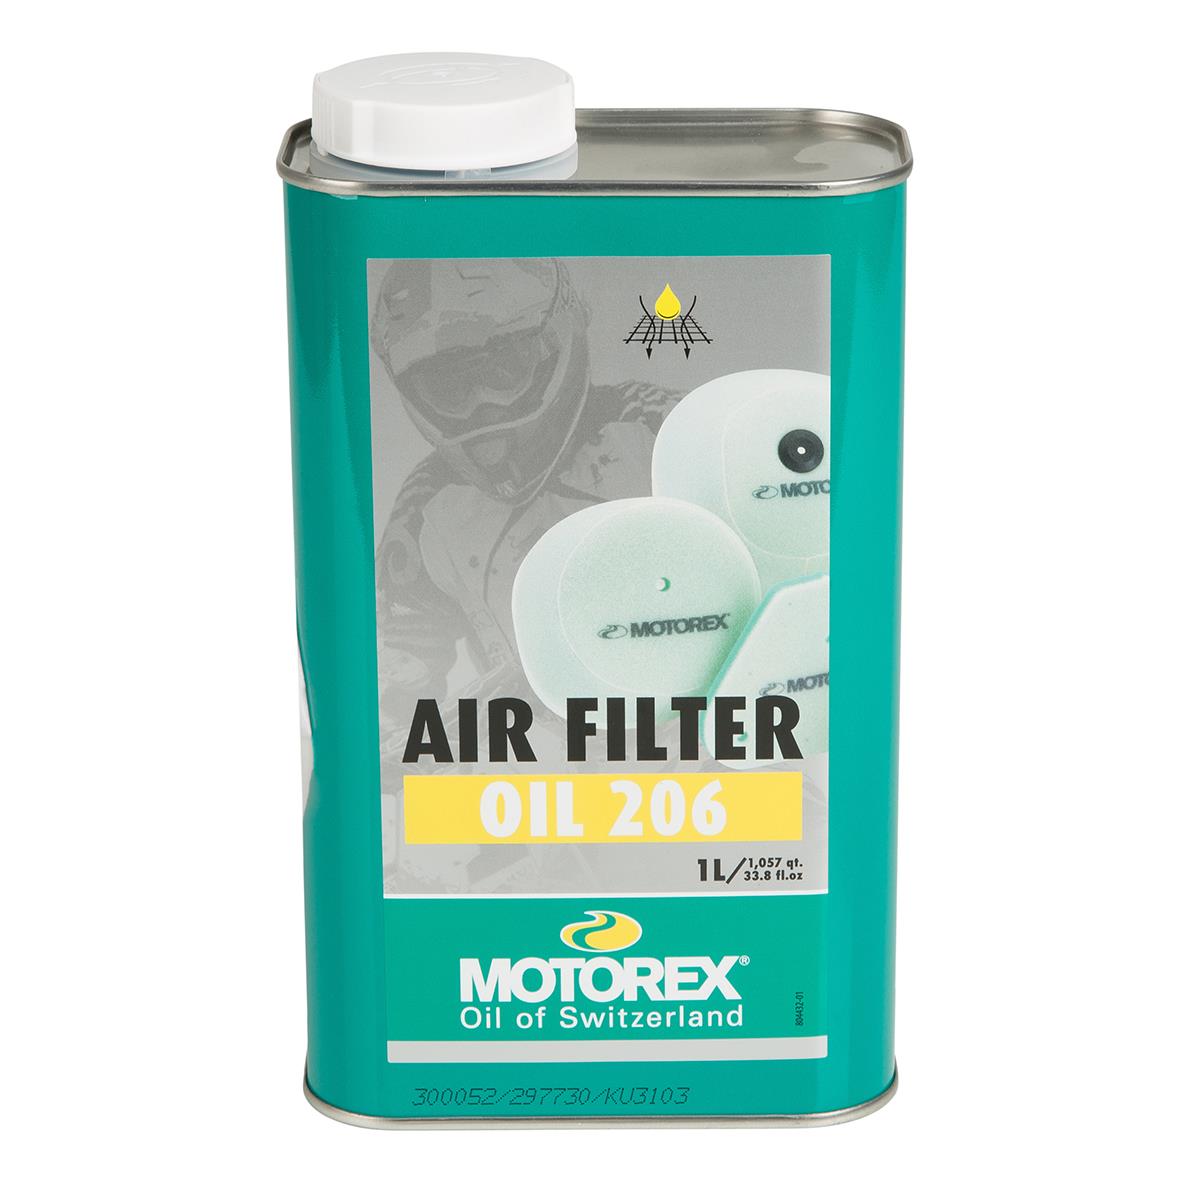 MOTOREX Luftfilteröl, Air Filter Oil 206, 1 l, VE 12